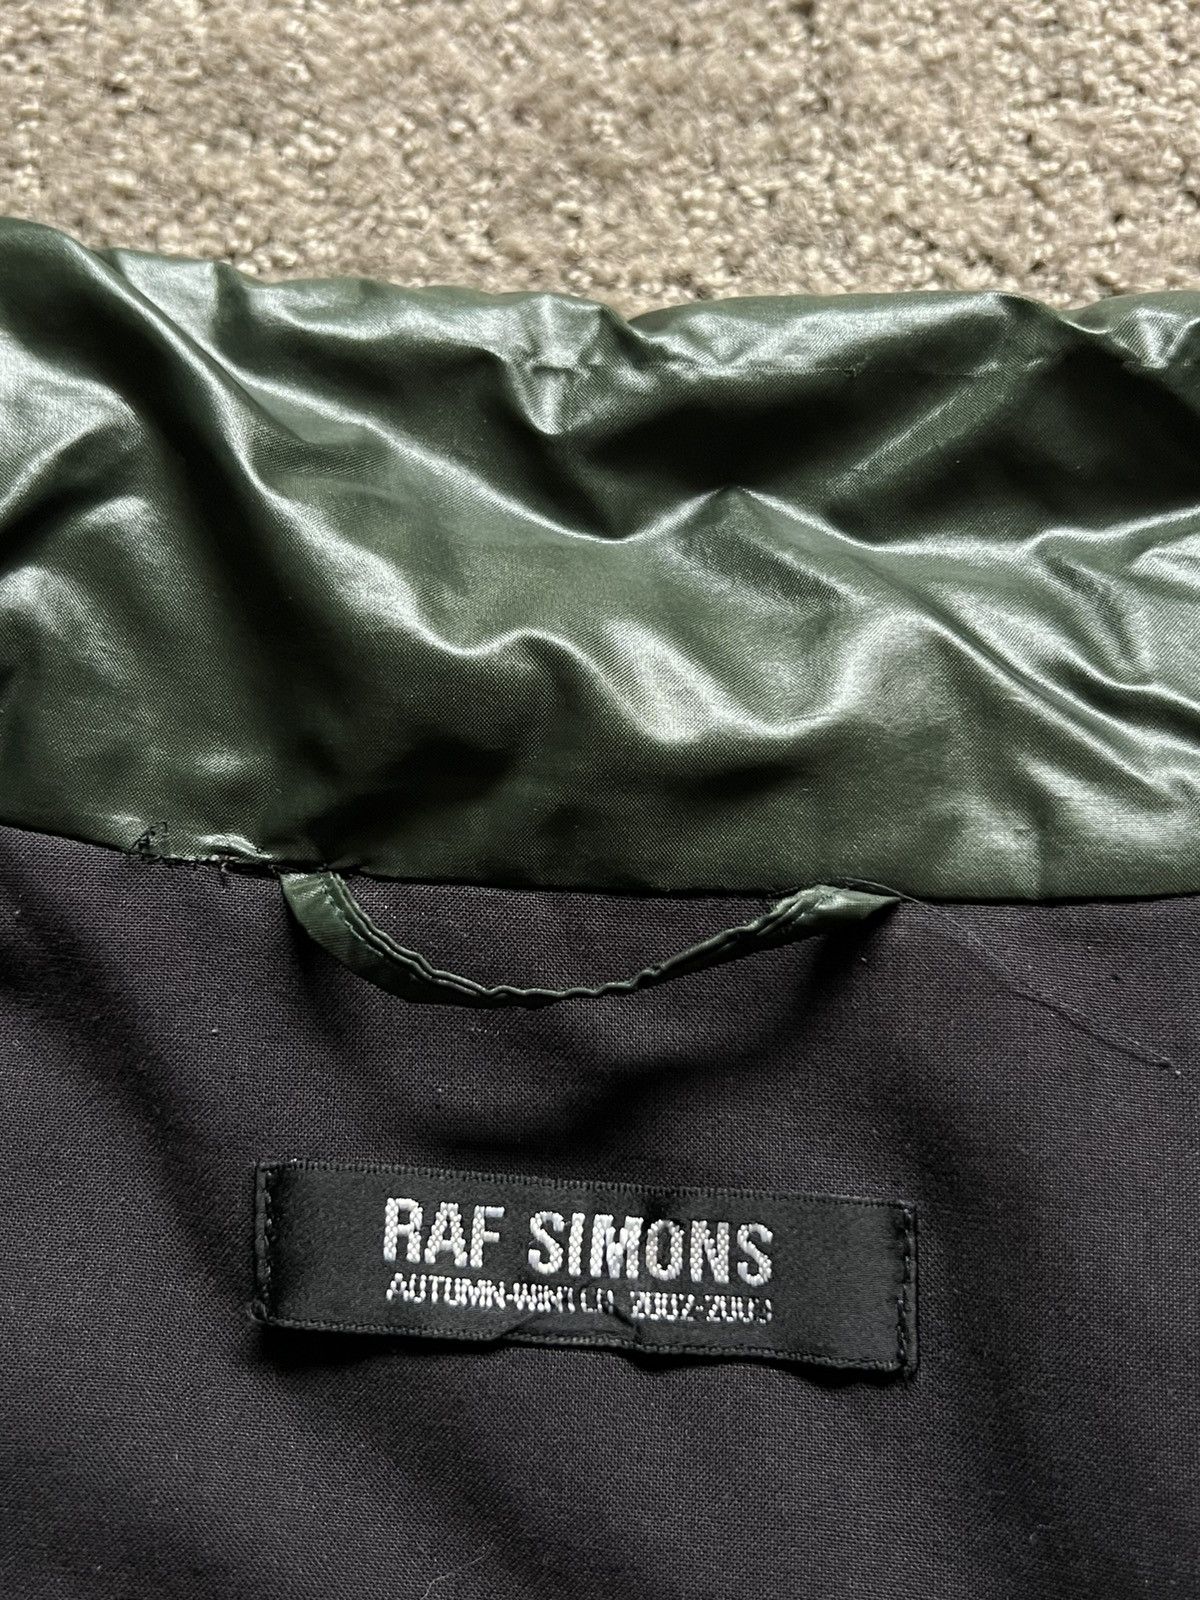 Raf Simons AW2002-2003 Raf Simons Virginia Creeper Green Puffer Jacket Size US L / EU 52-54 / 3 - 4 Thumbnail